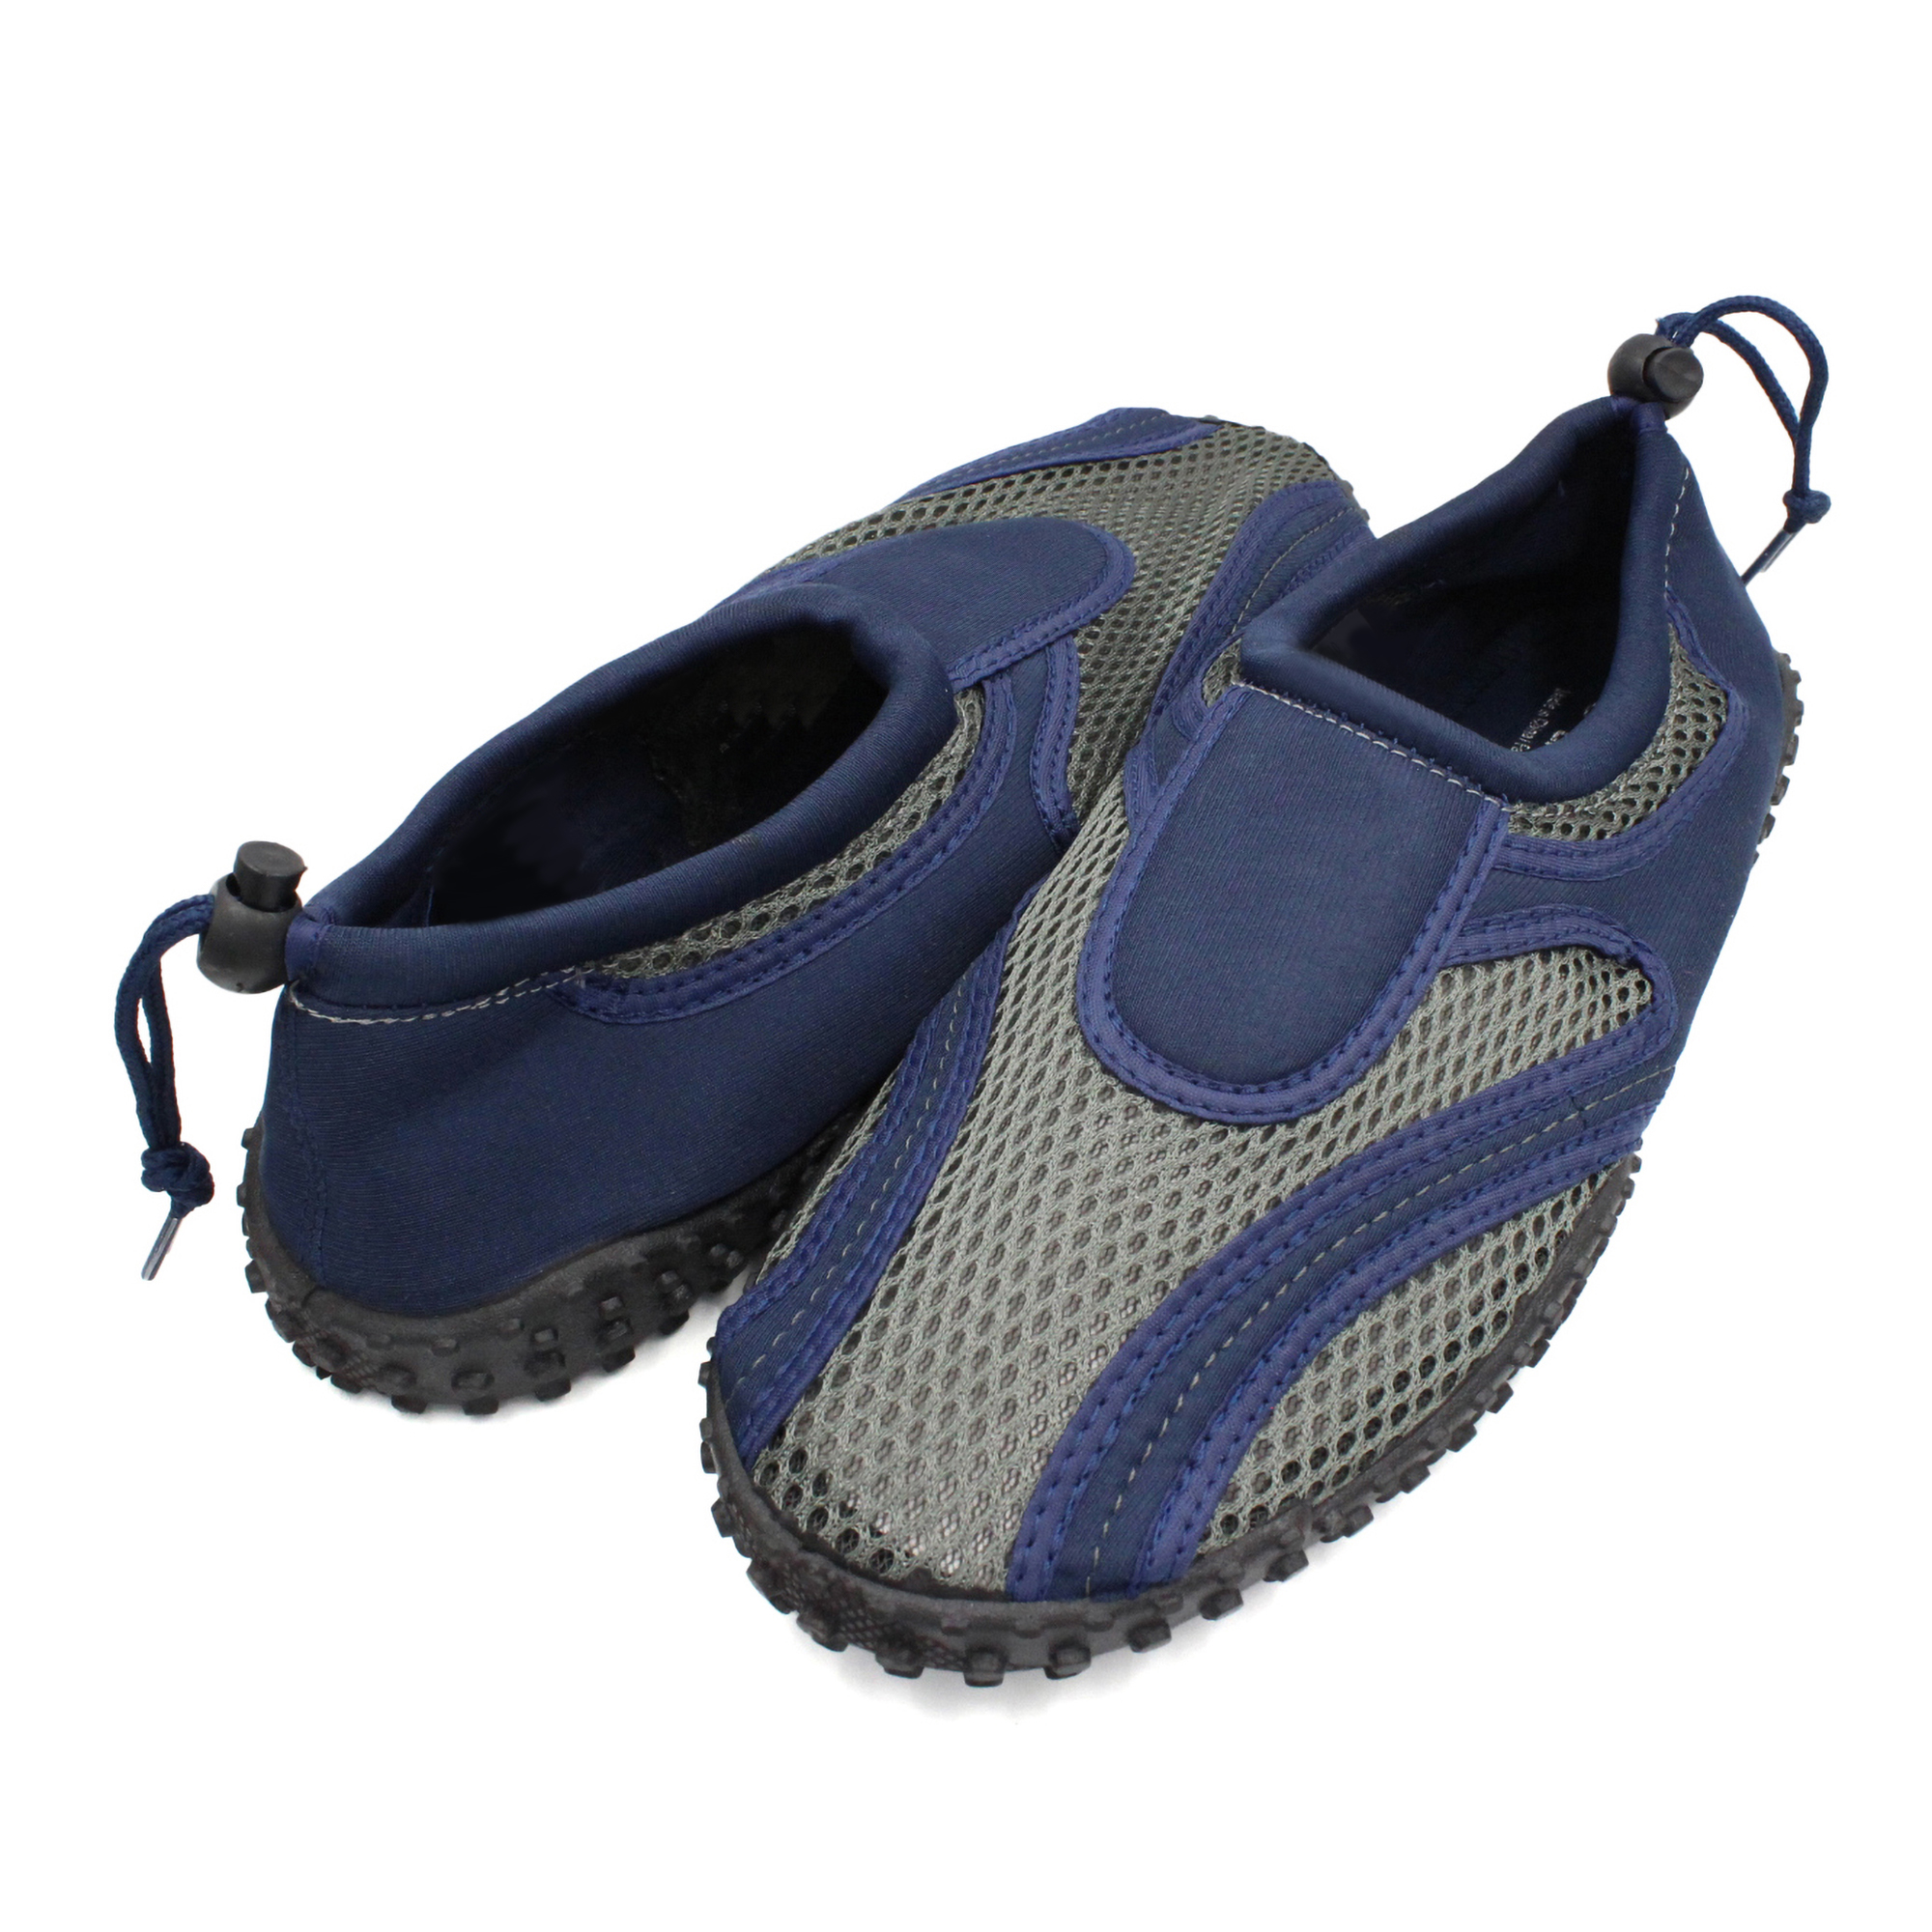 Ventana Men's Water Shoes Beach Aqua Sock Quick Dry Pool Slip On Sandals - image 4 of 5